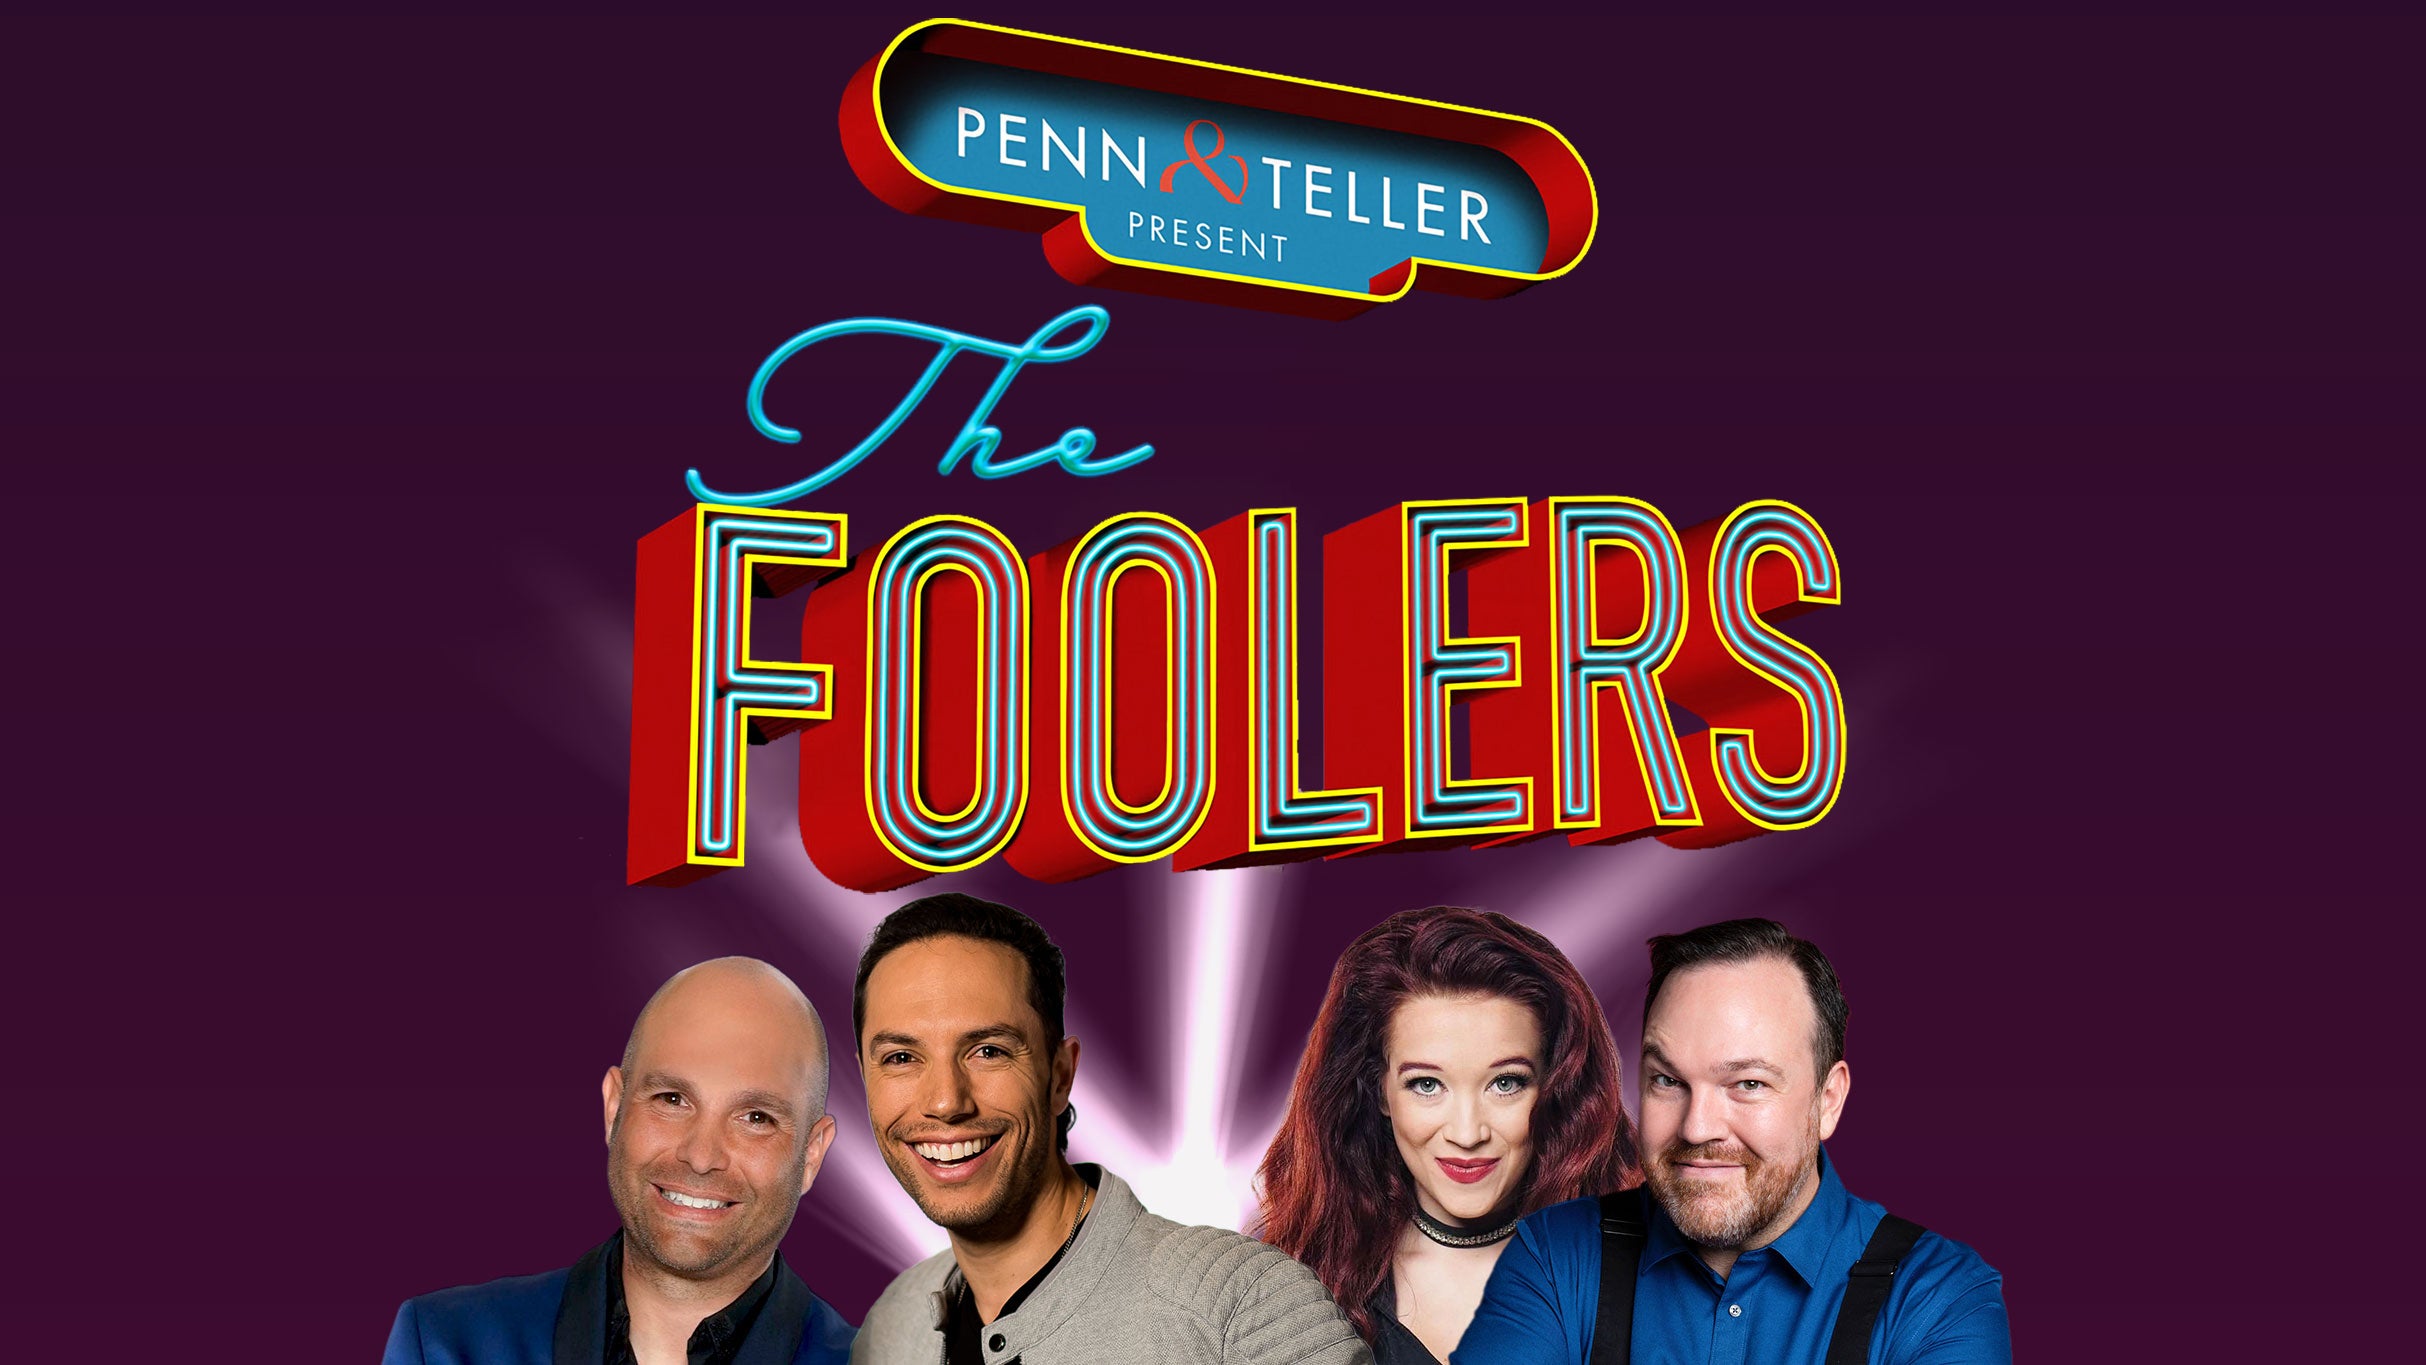 Penn & Teller present The Foolers